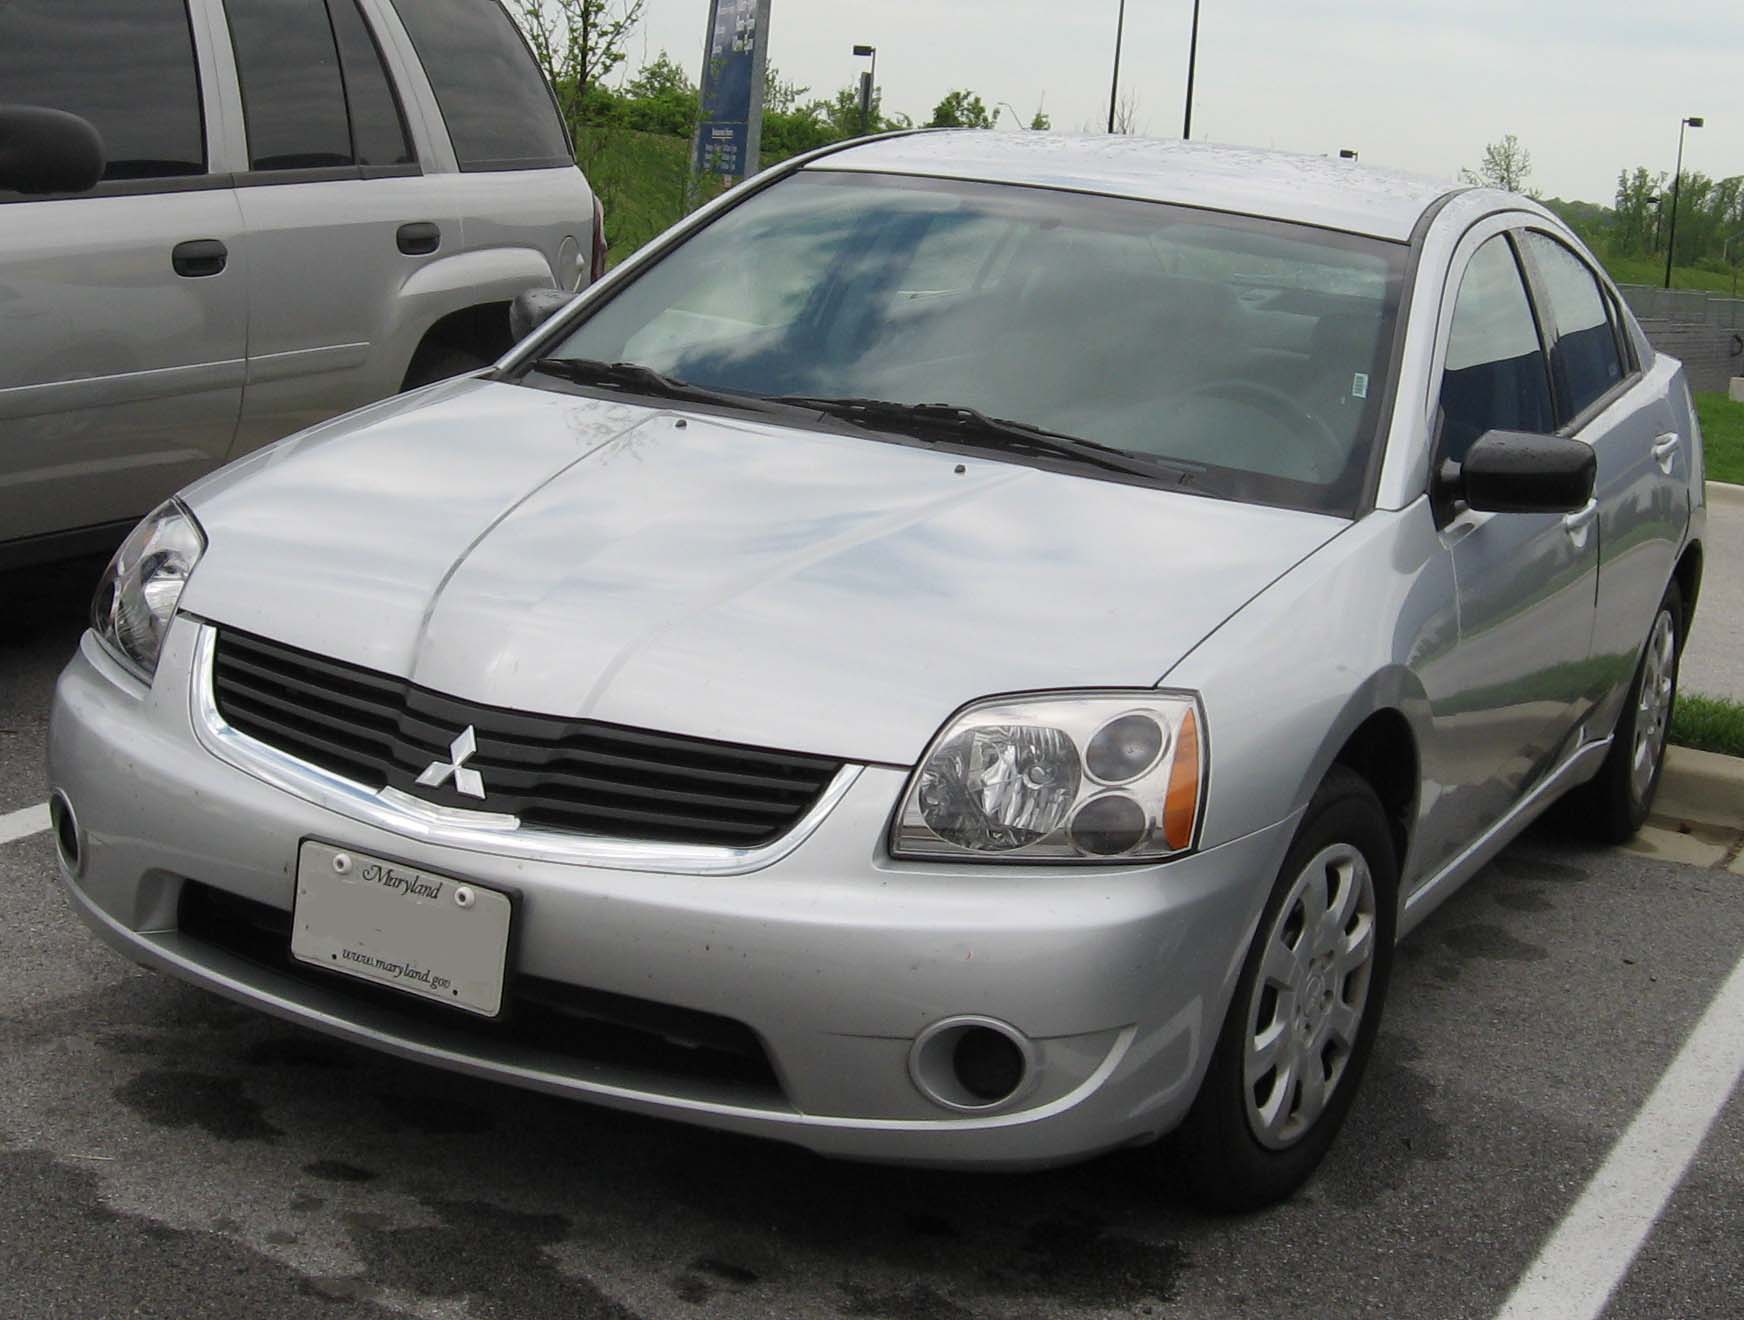 File:2007-Mitsubishi-Galant-ES.jpg - Wikimedia Commons